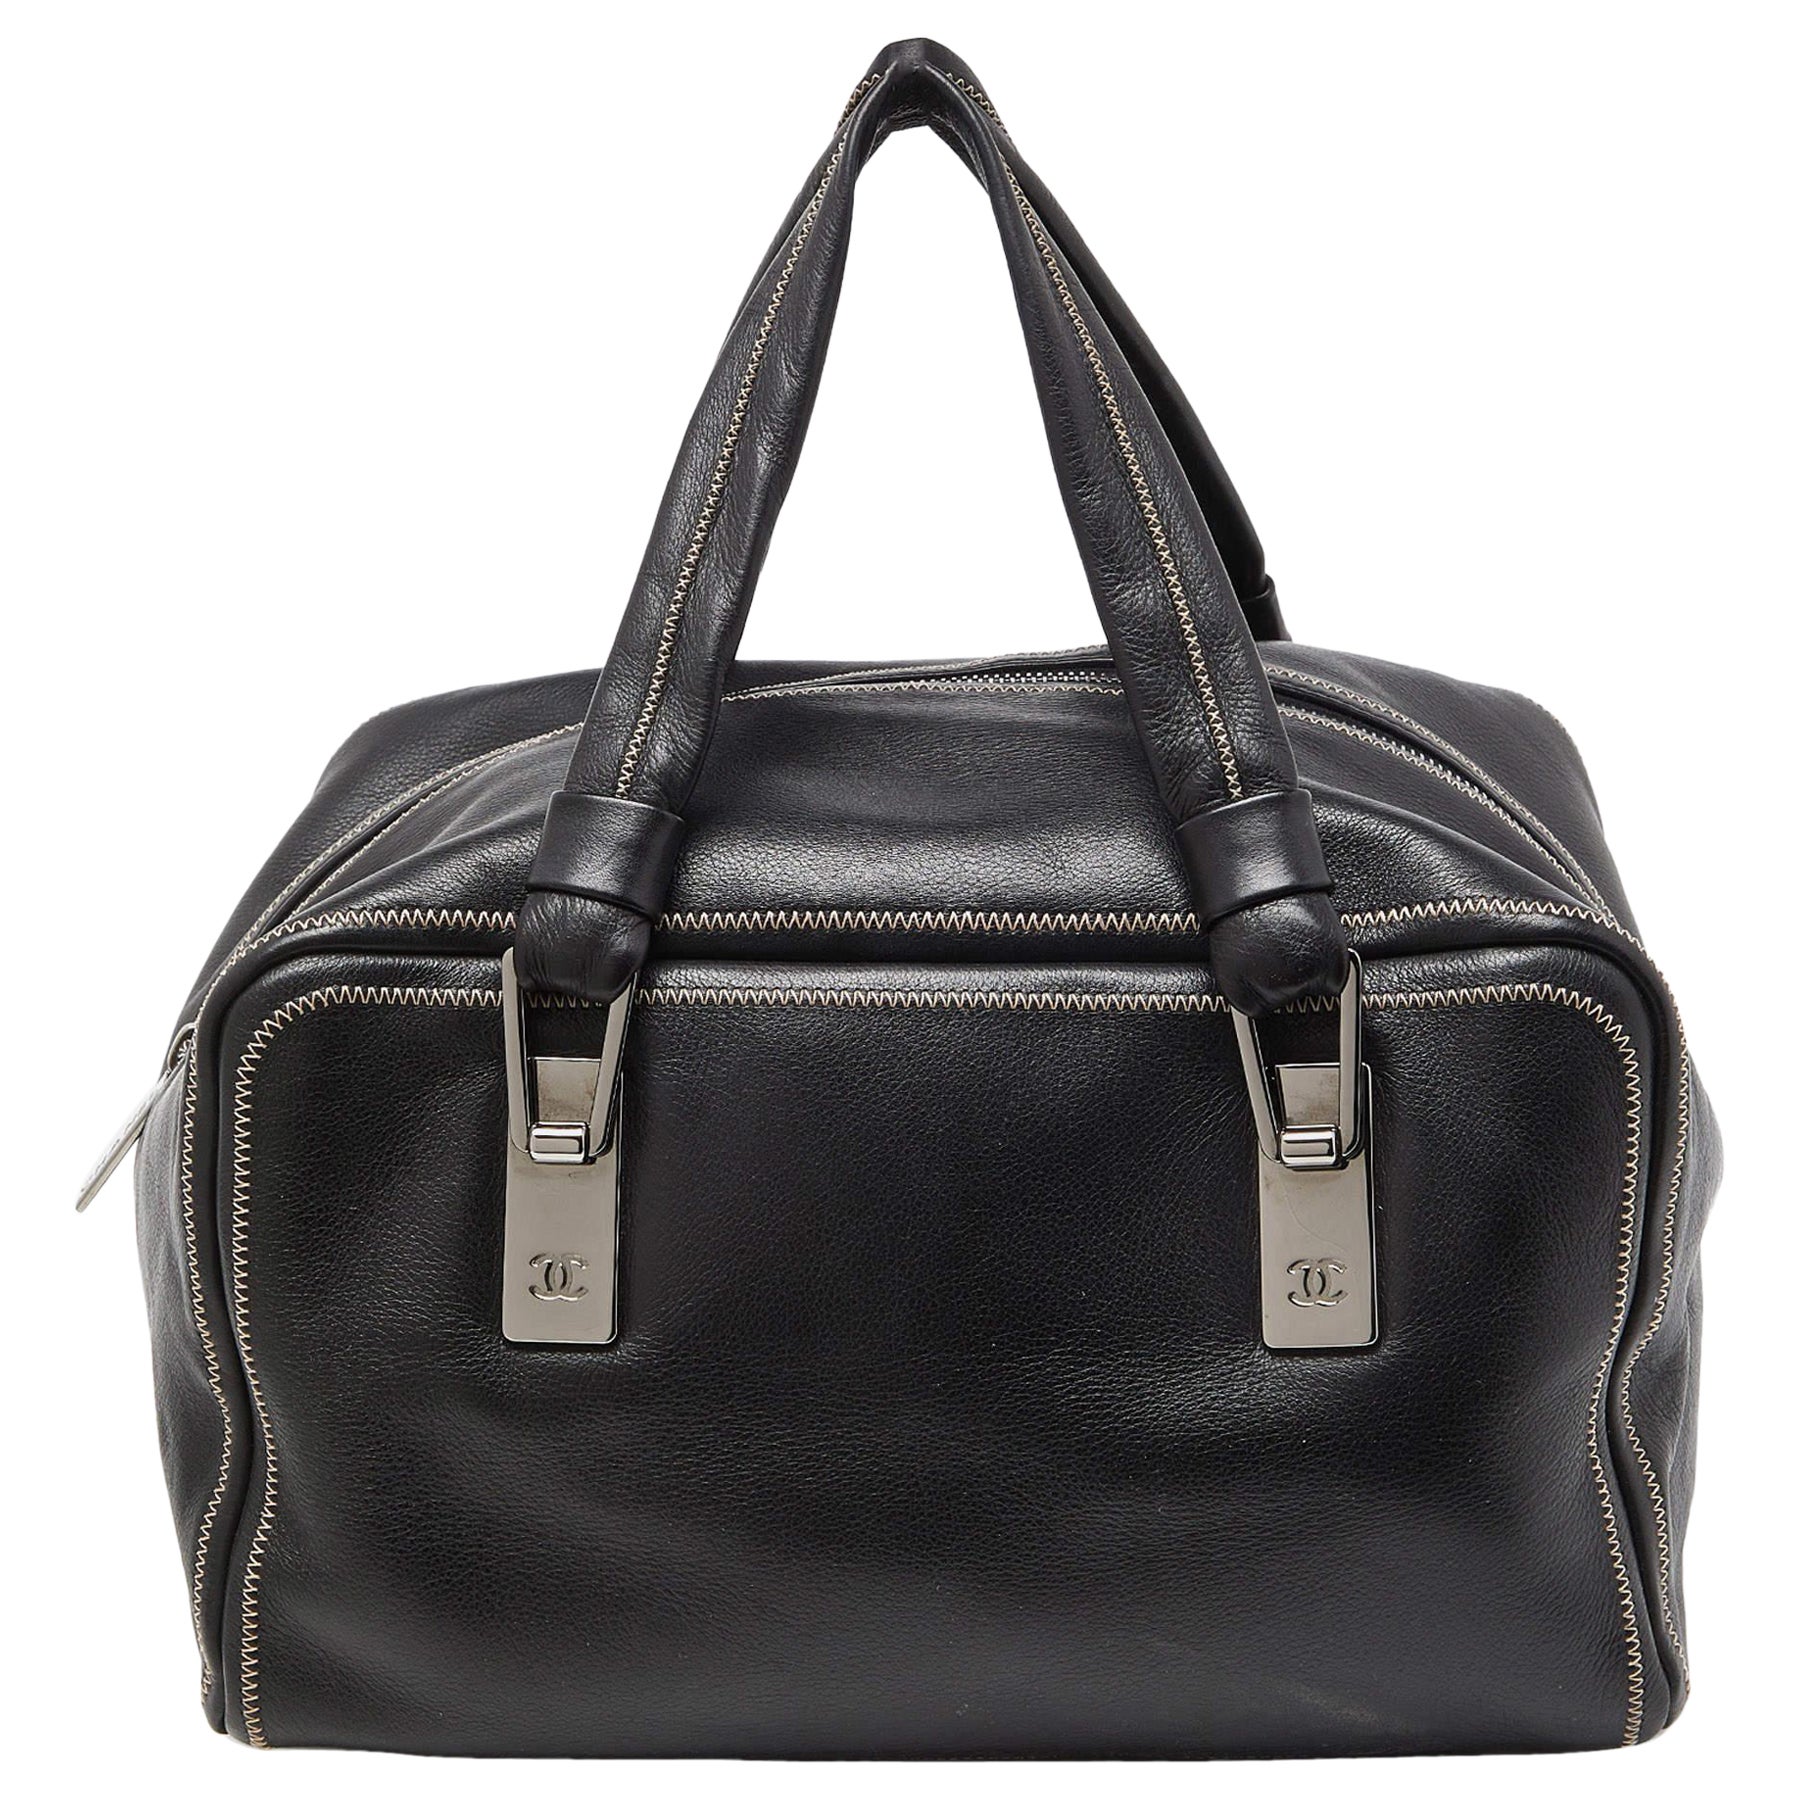 Chanel Black Leather CC Bowler Bag For Sale